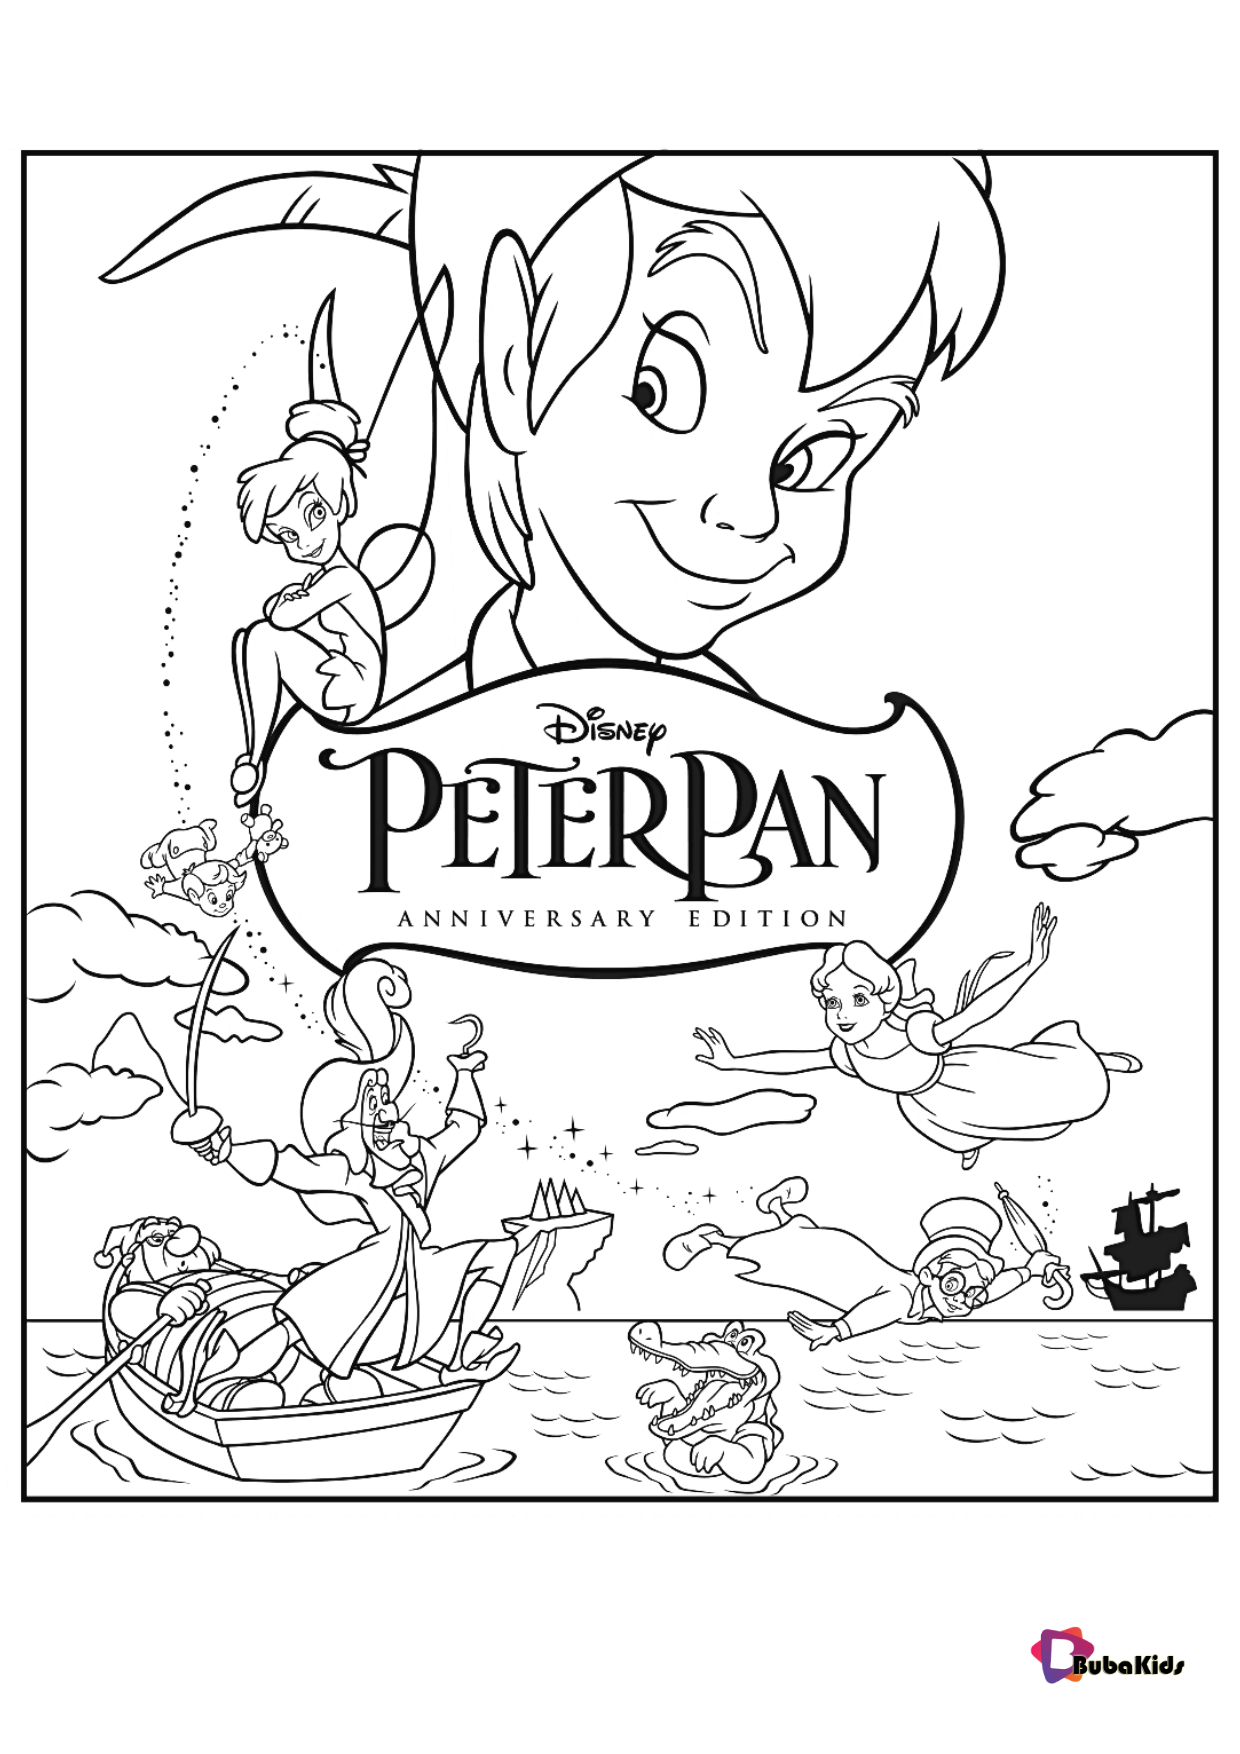 Disneys Peter Pan coloring page